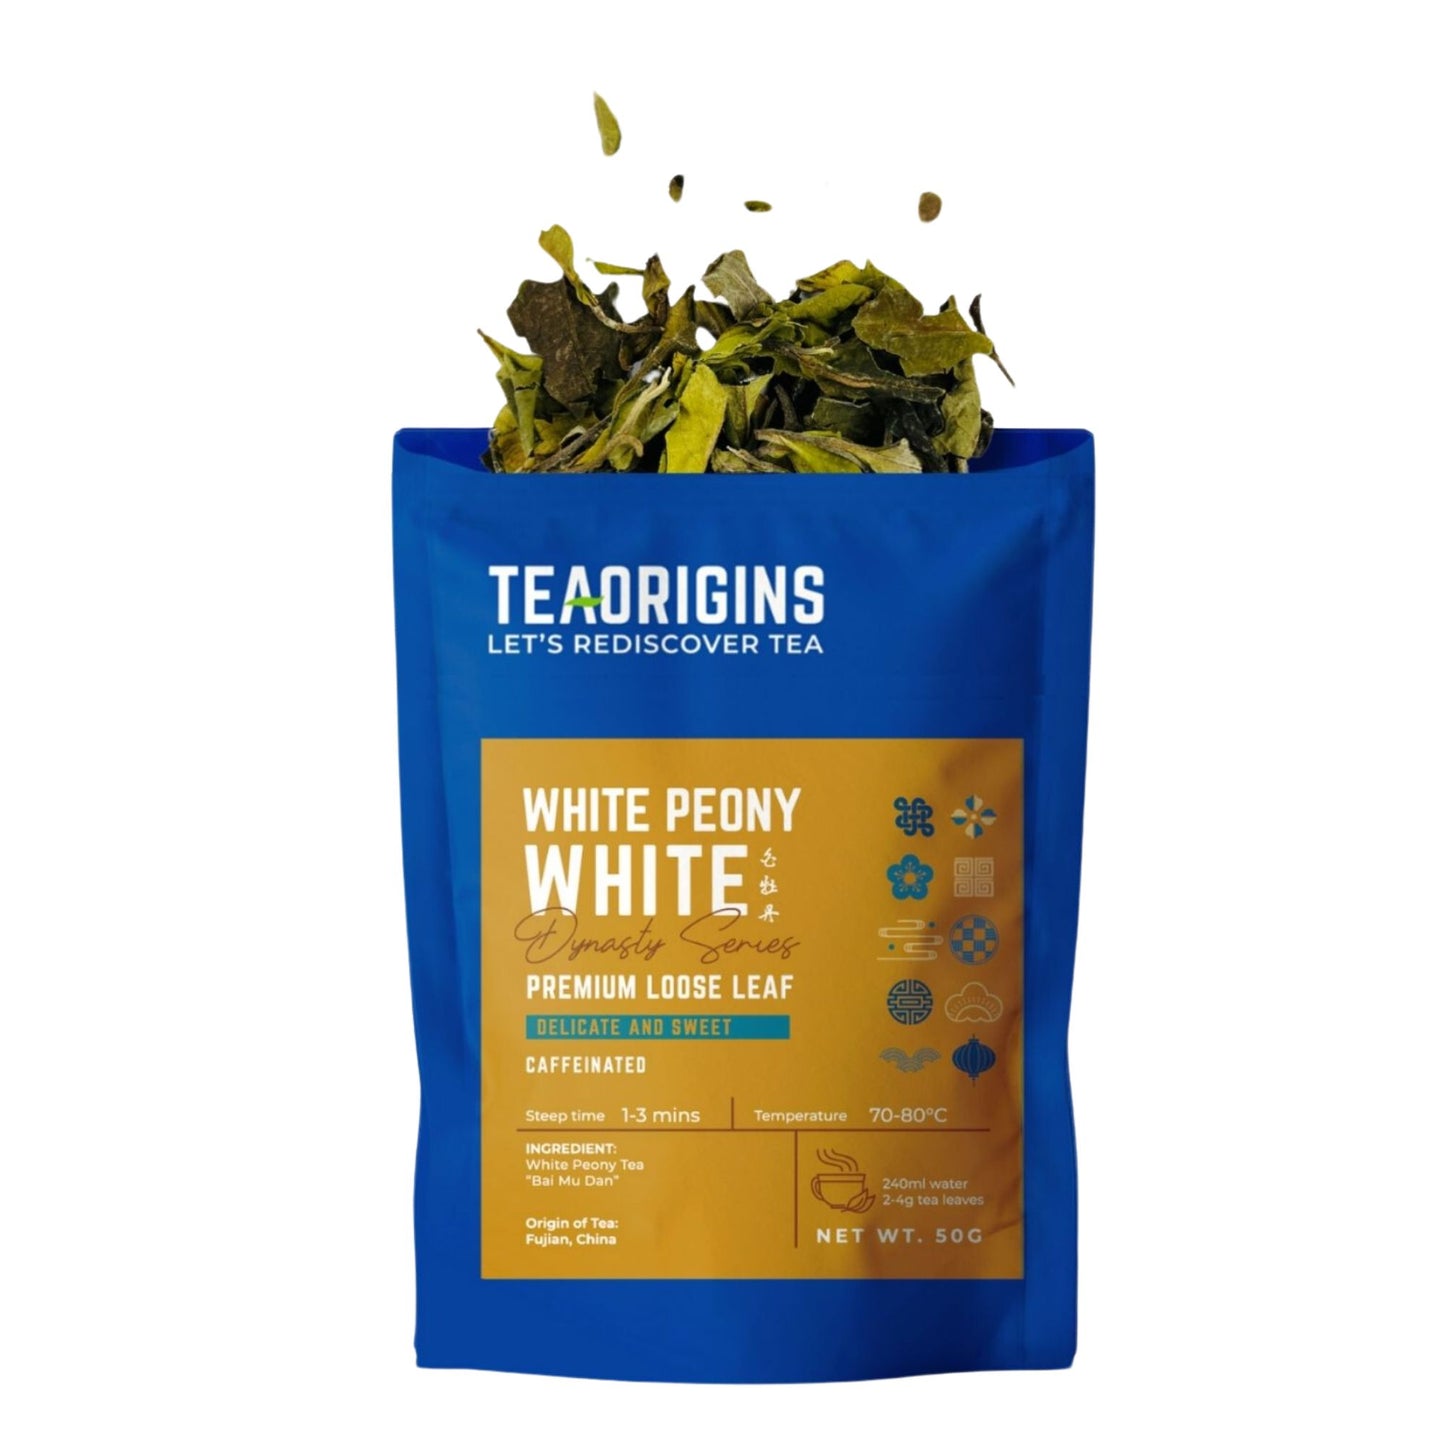 Teaorigins White Peony Premium Loose Leaf 50g Delicate & Sweet